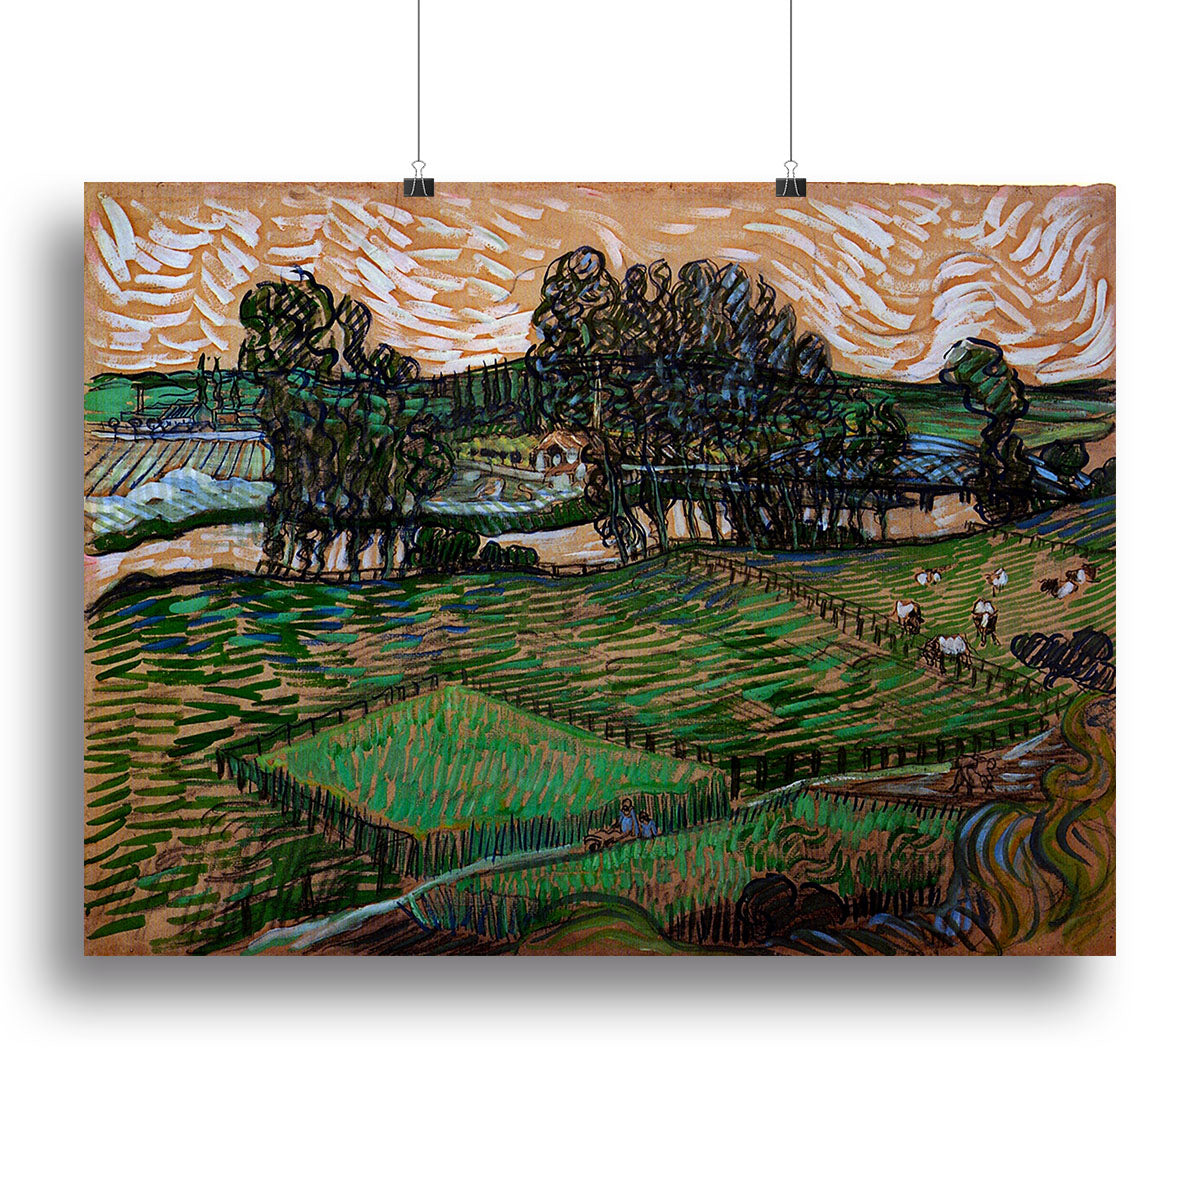 Landscape with Bridge across the Oise by Van Gogh Canvas Print or Poster - Canvas Art Rocks - 2